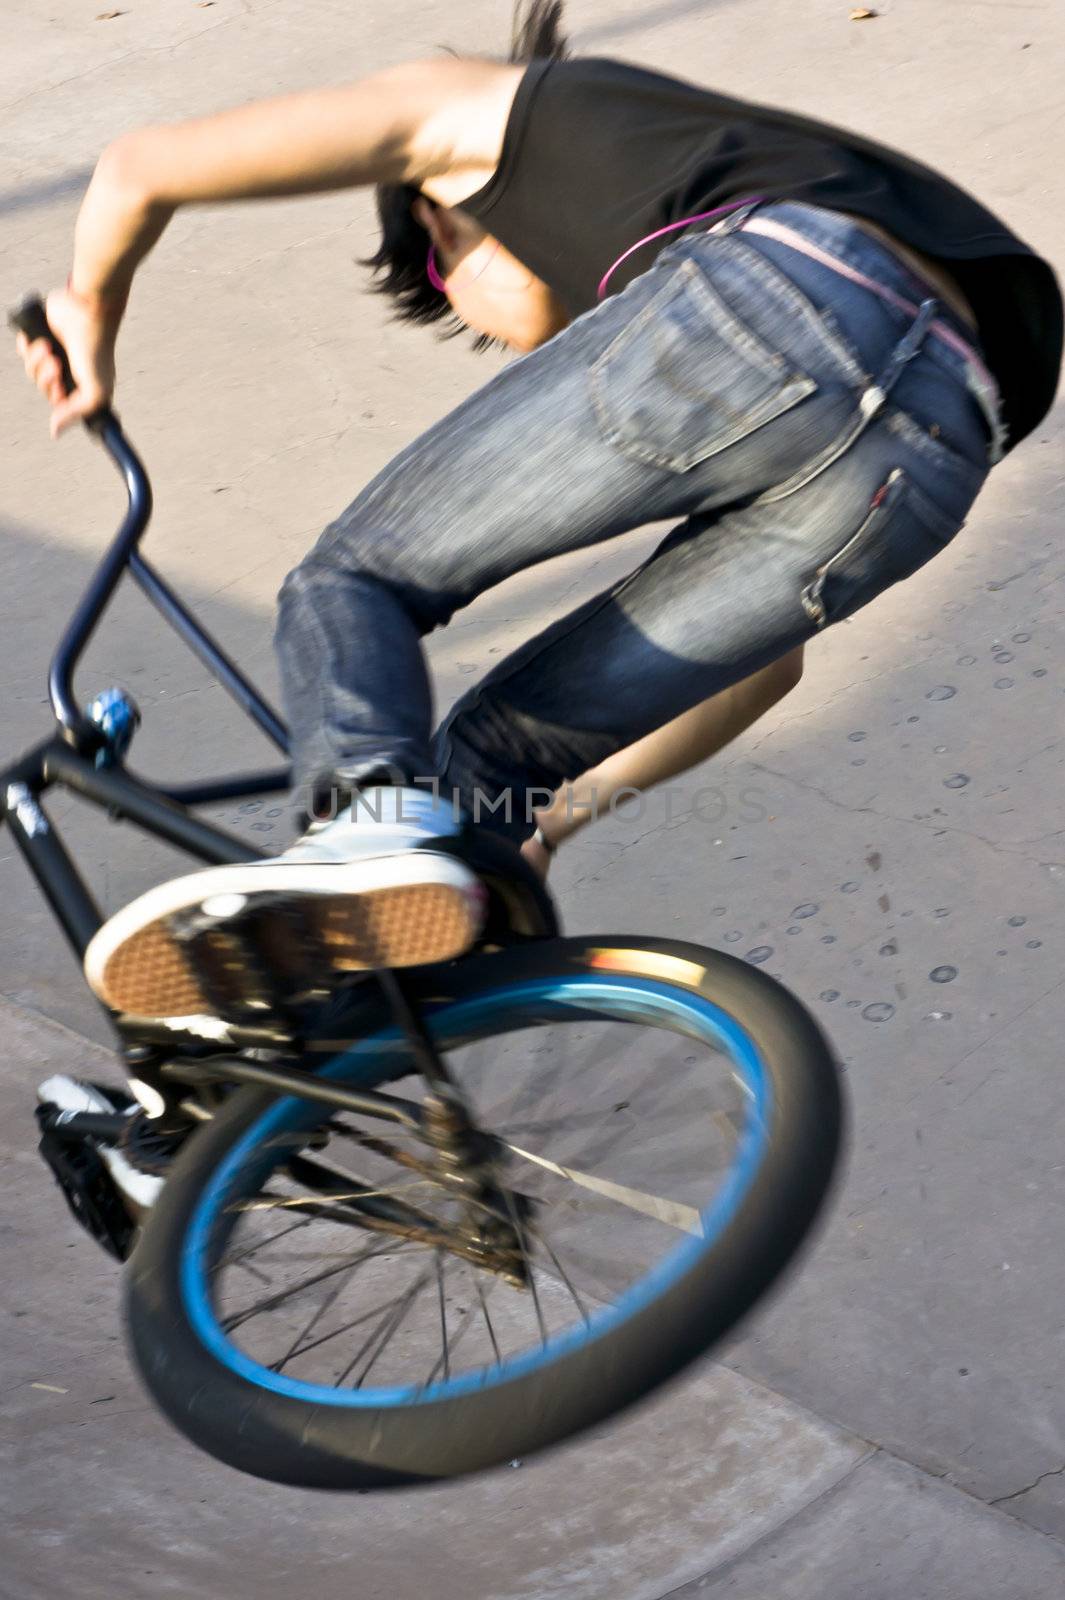 Asian Teenage boy on stunt bike ready to go